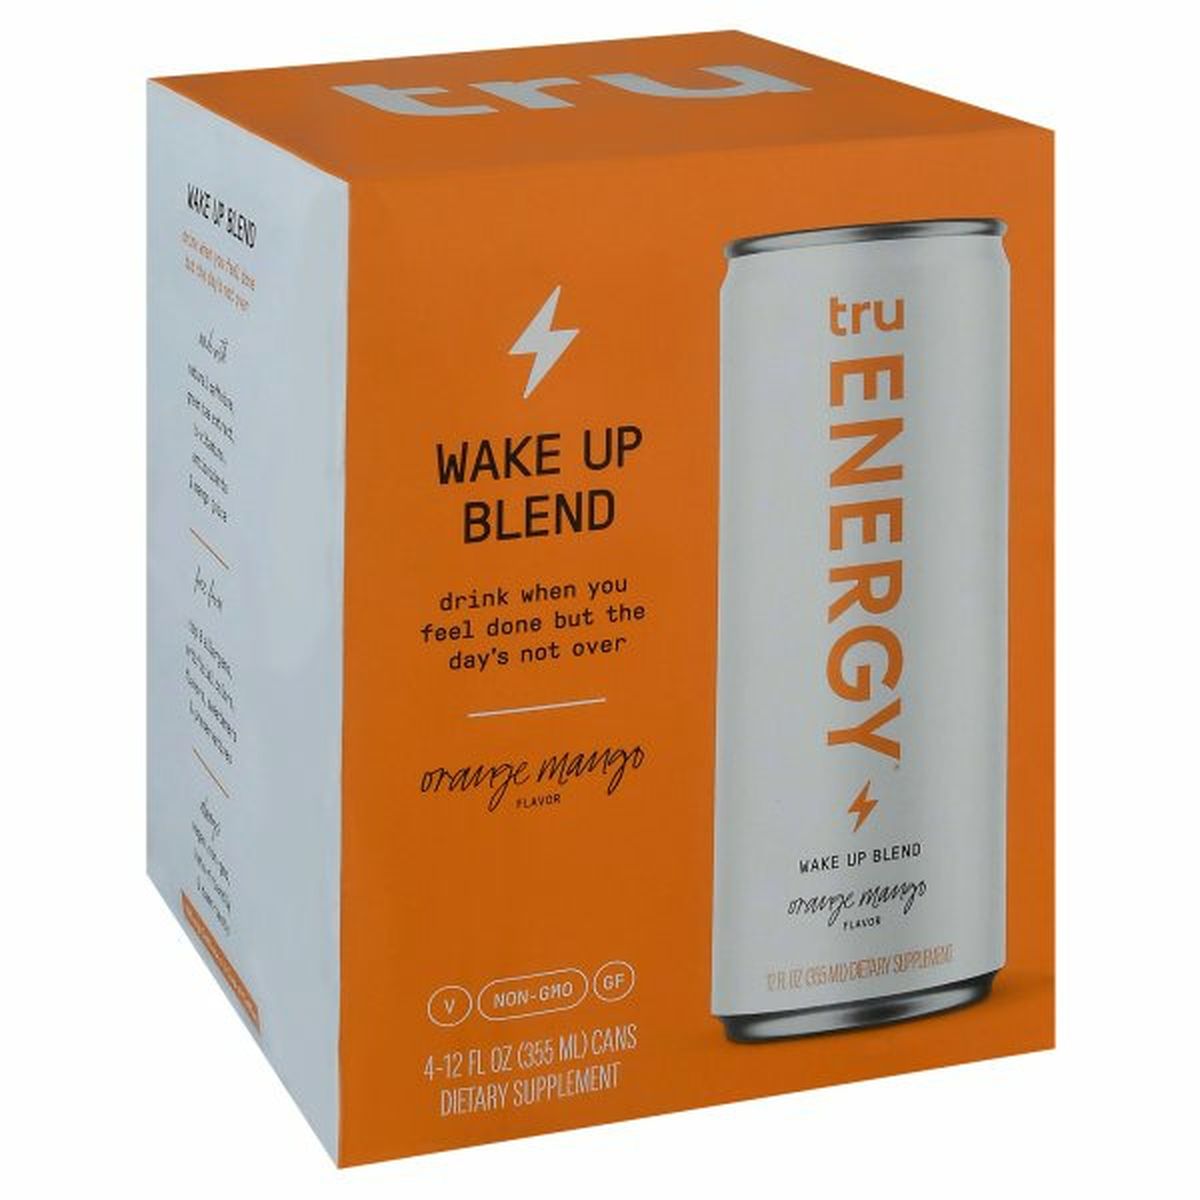 Calories in Tru Energy Drink, Orange Mango Flavor, Wake Up Blend